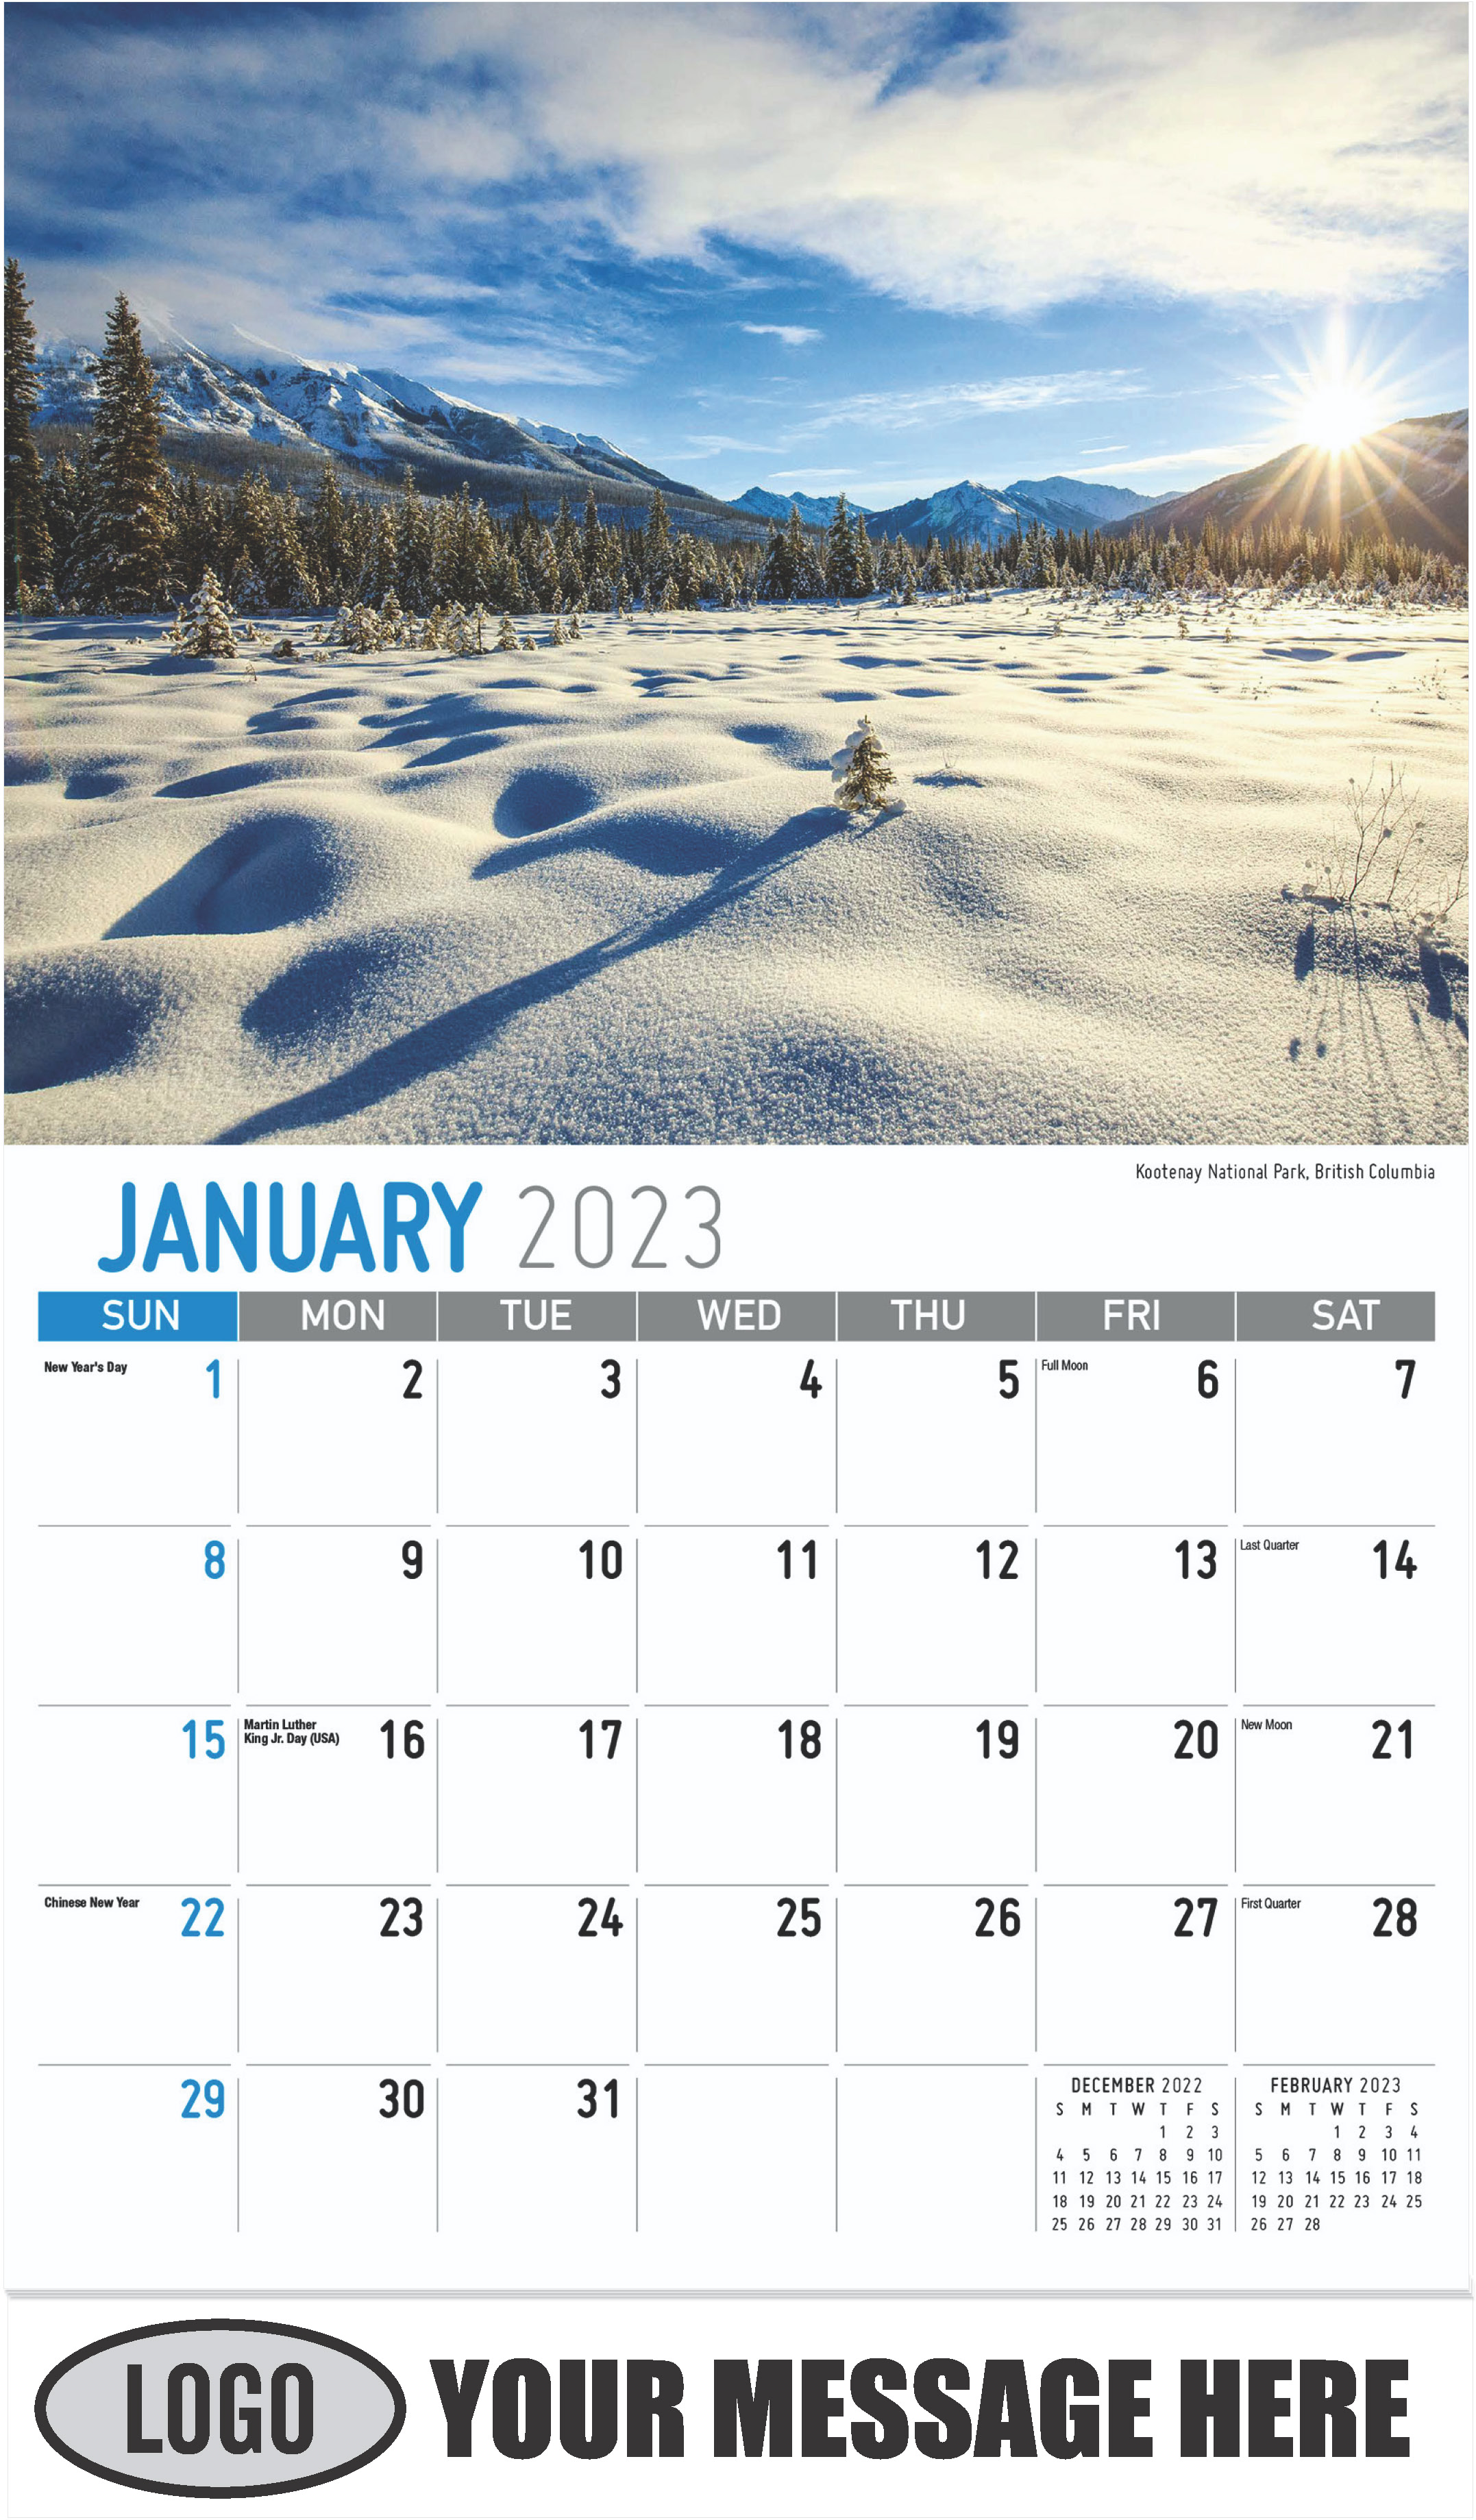 Kootenay National Park, British Columbia - January - Scenes of Western Canada 2023 Promotional Calendar